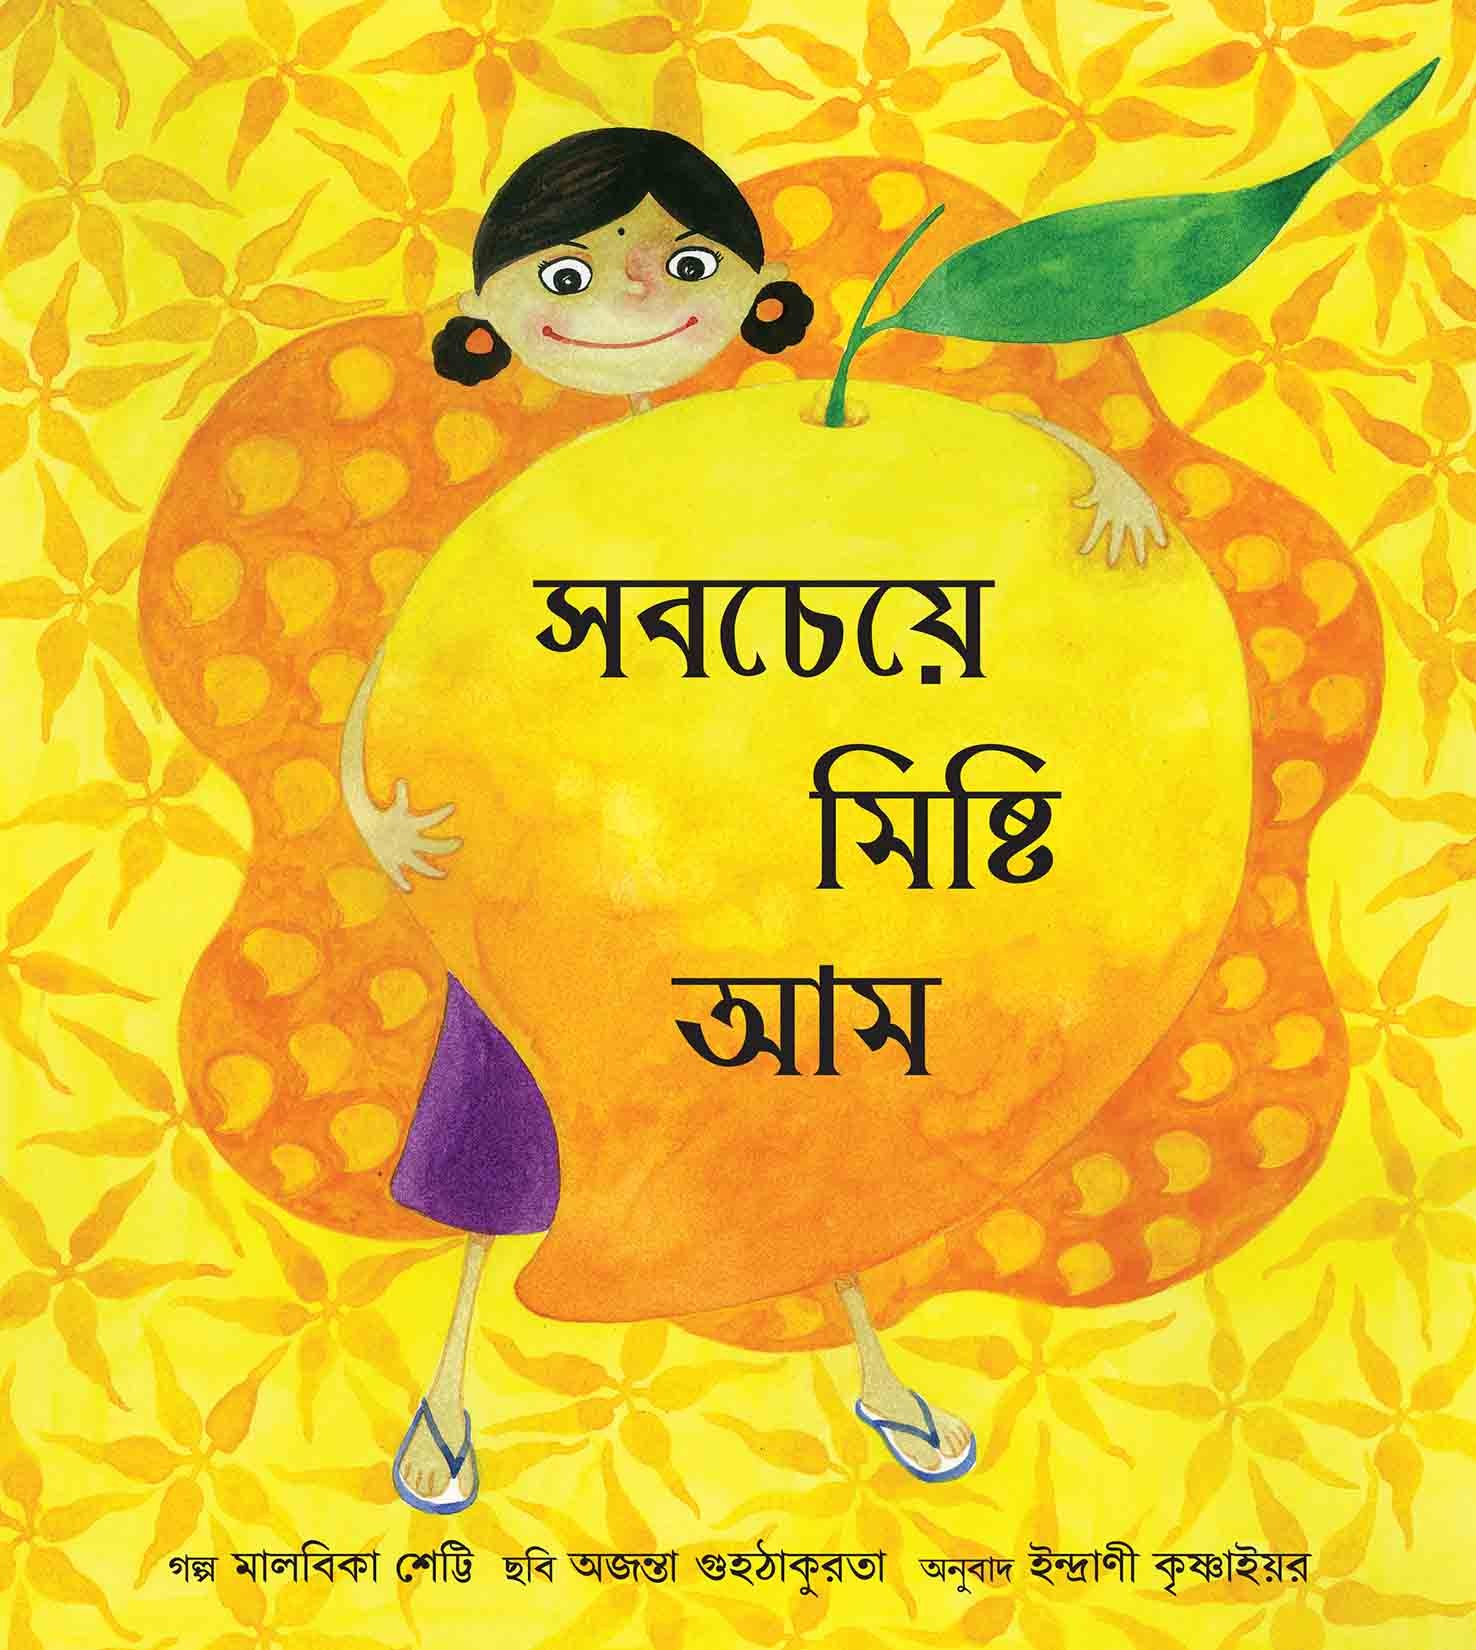 The Sweetest Mango/Shobcheye Mishti Aam (Bengali)